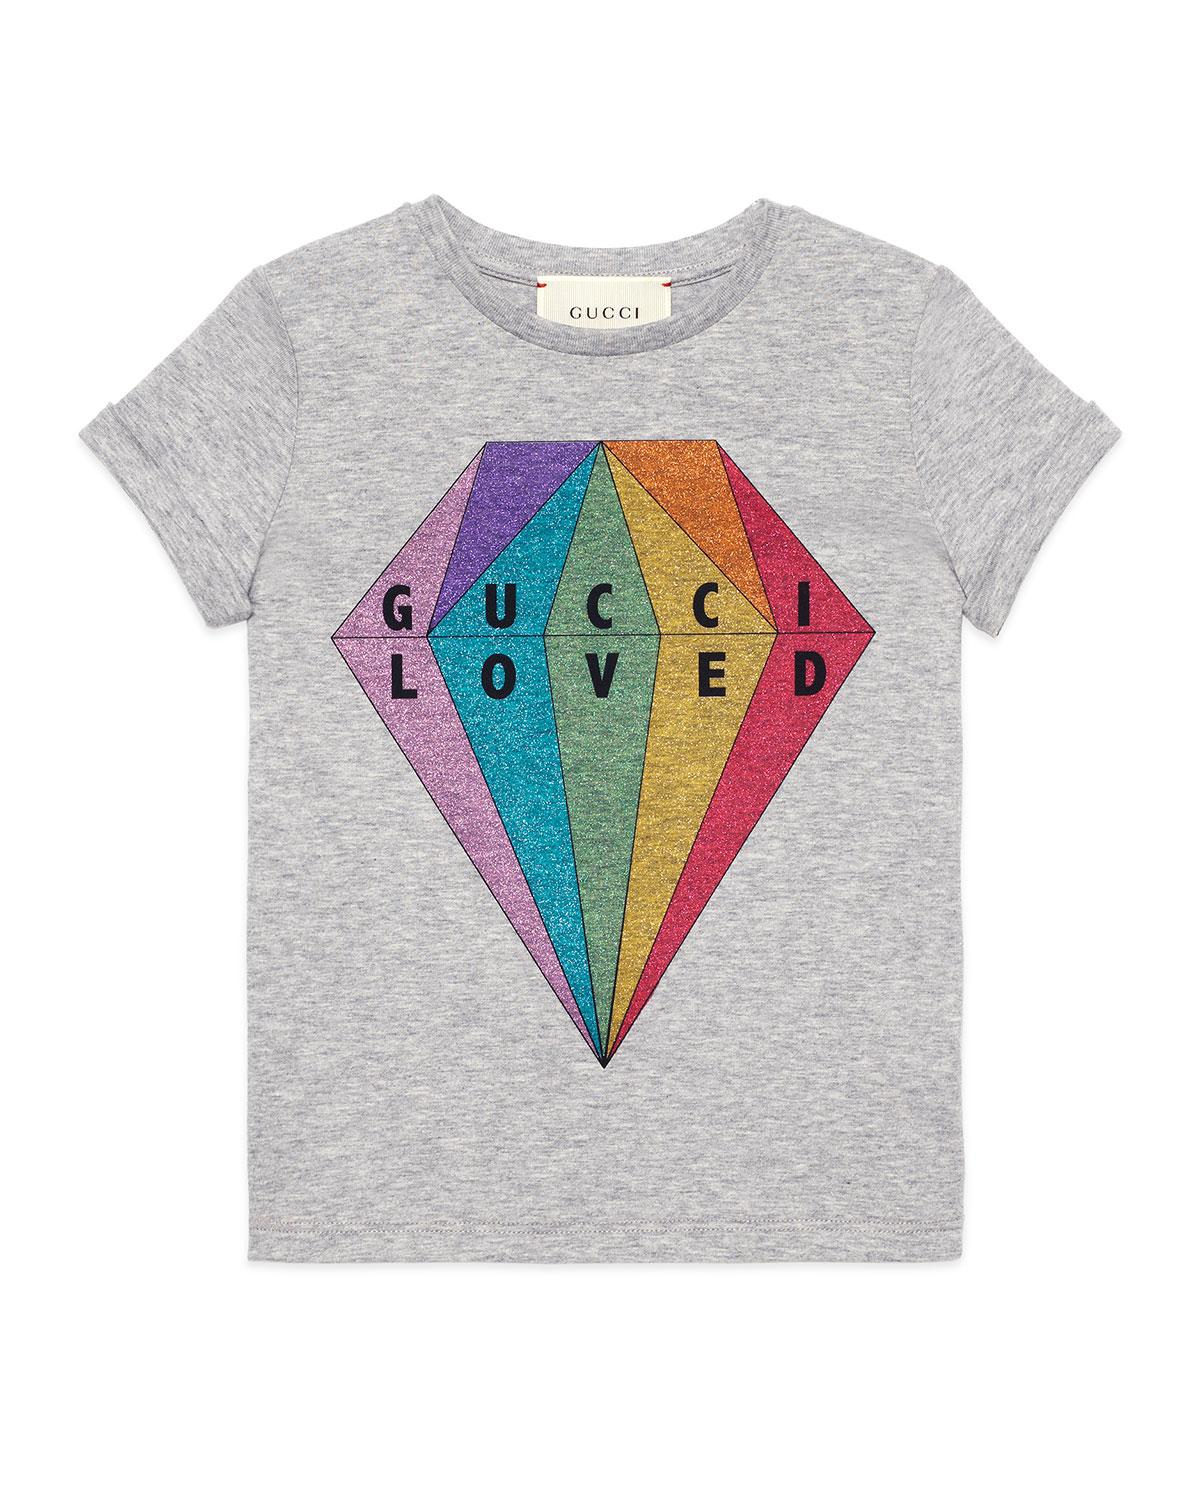 Gucci Loved Glitter Diamond T-shirt In Gray | ModeSens